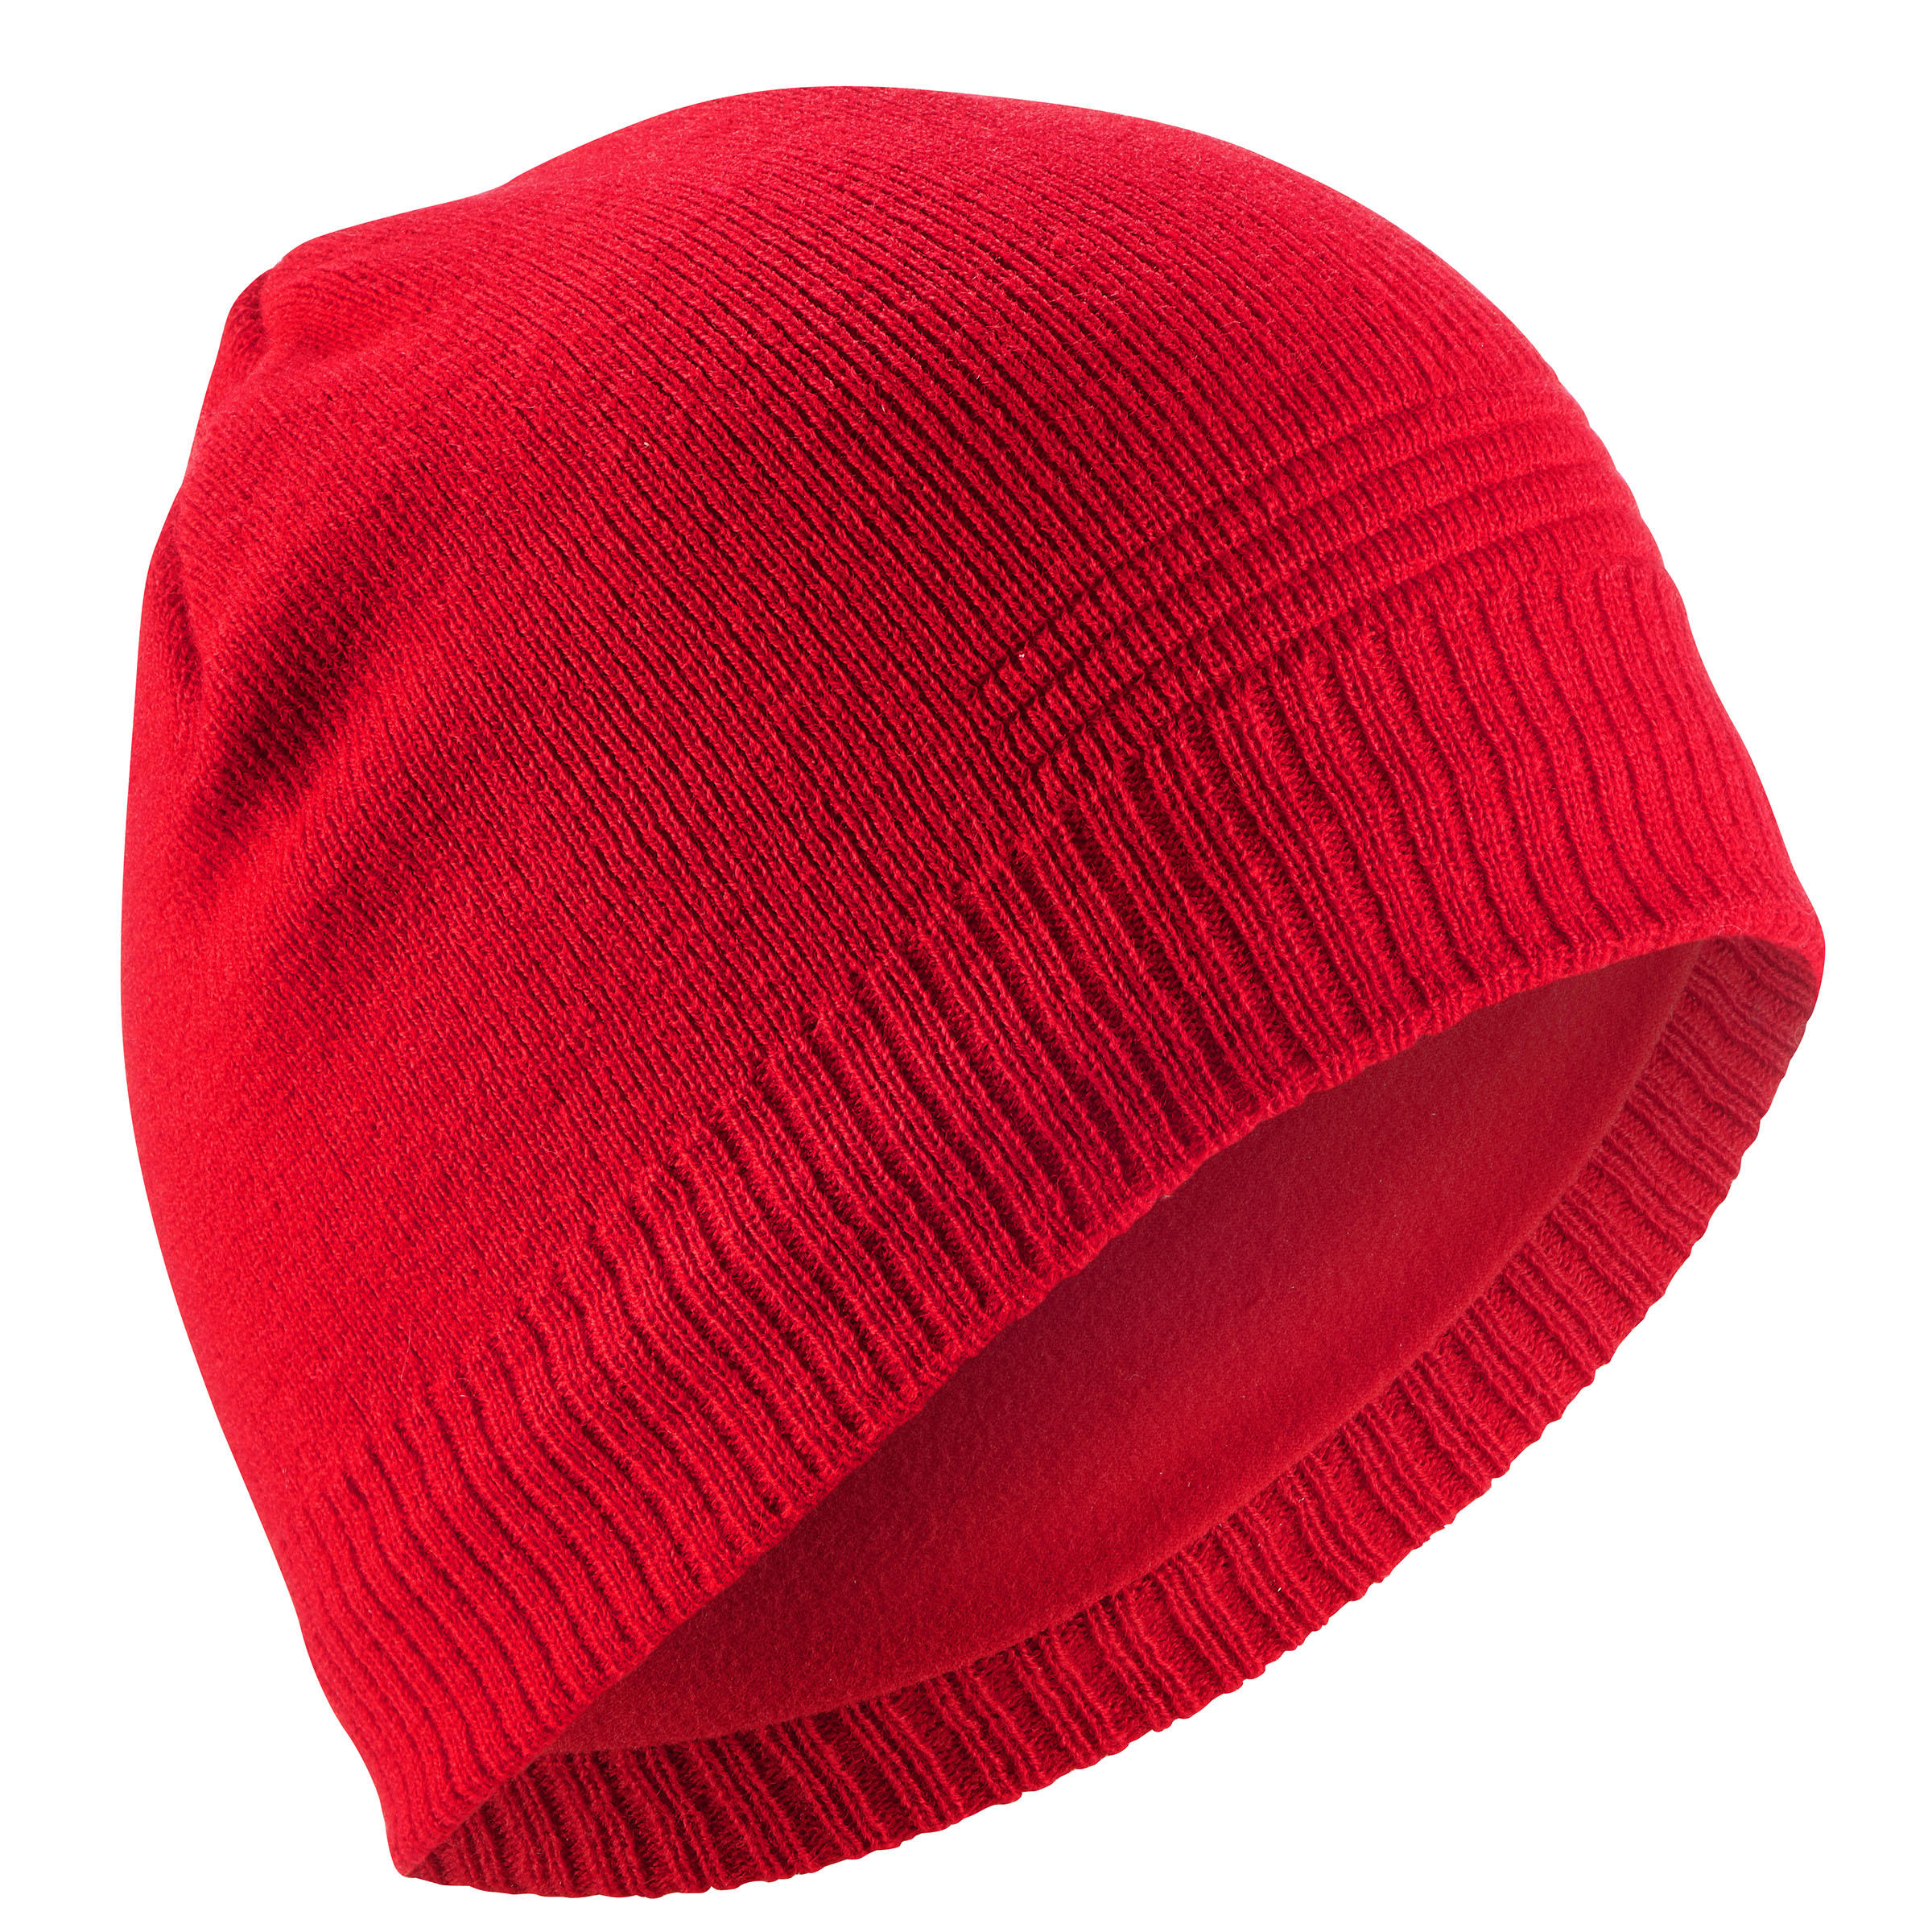 WEDZE Pure Children's Ski Hat - Red